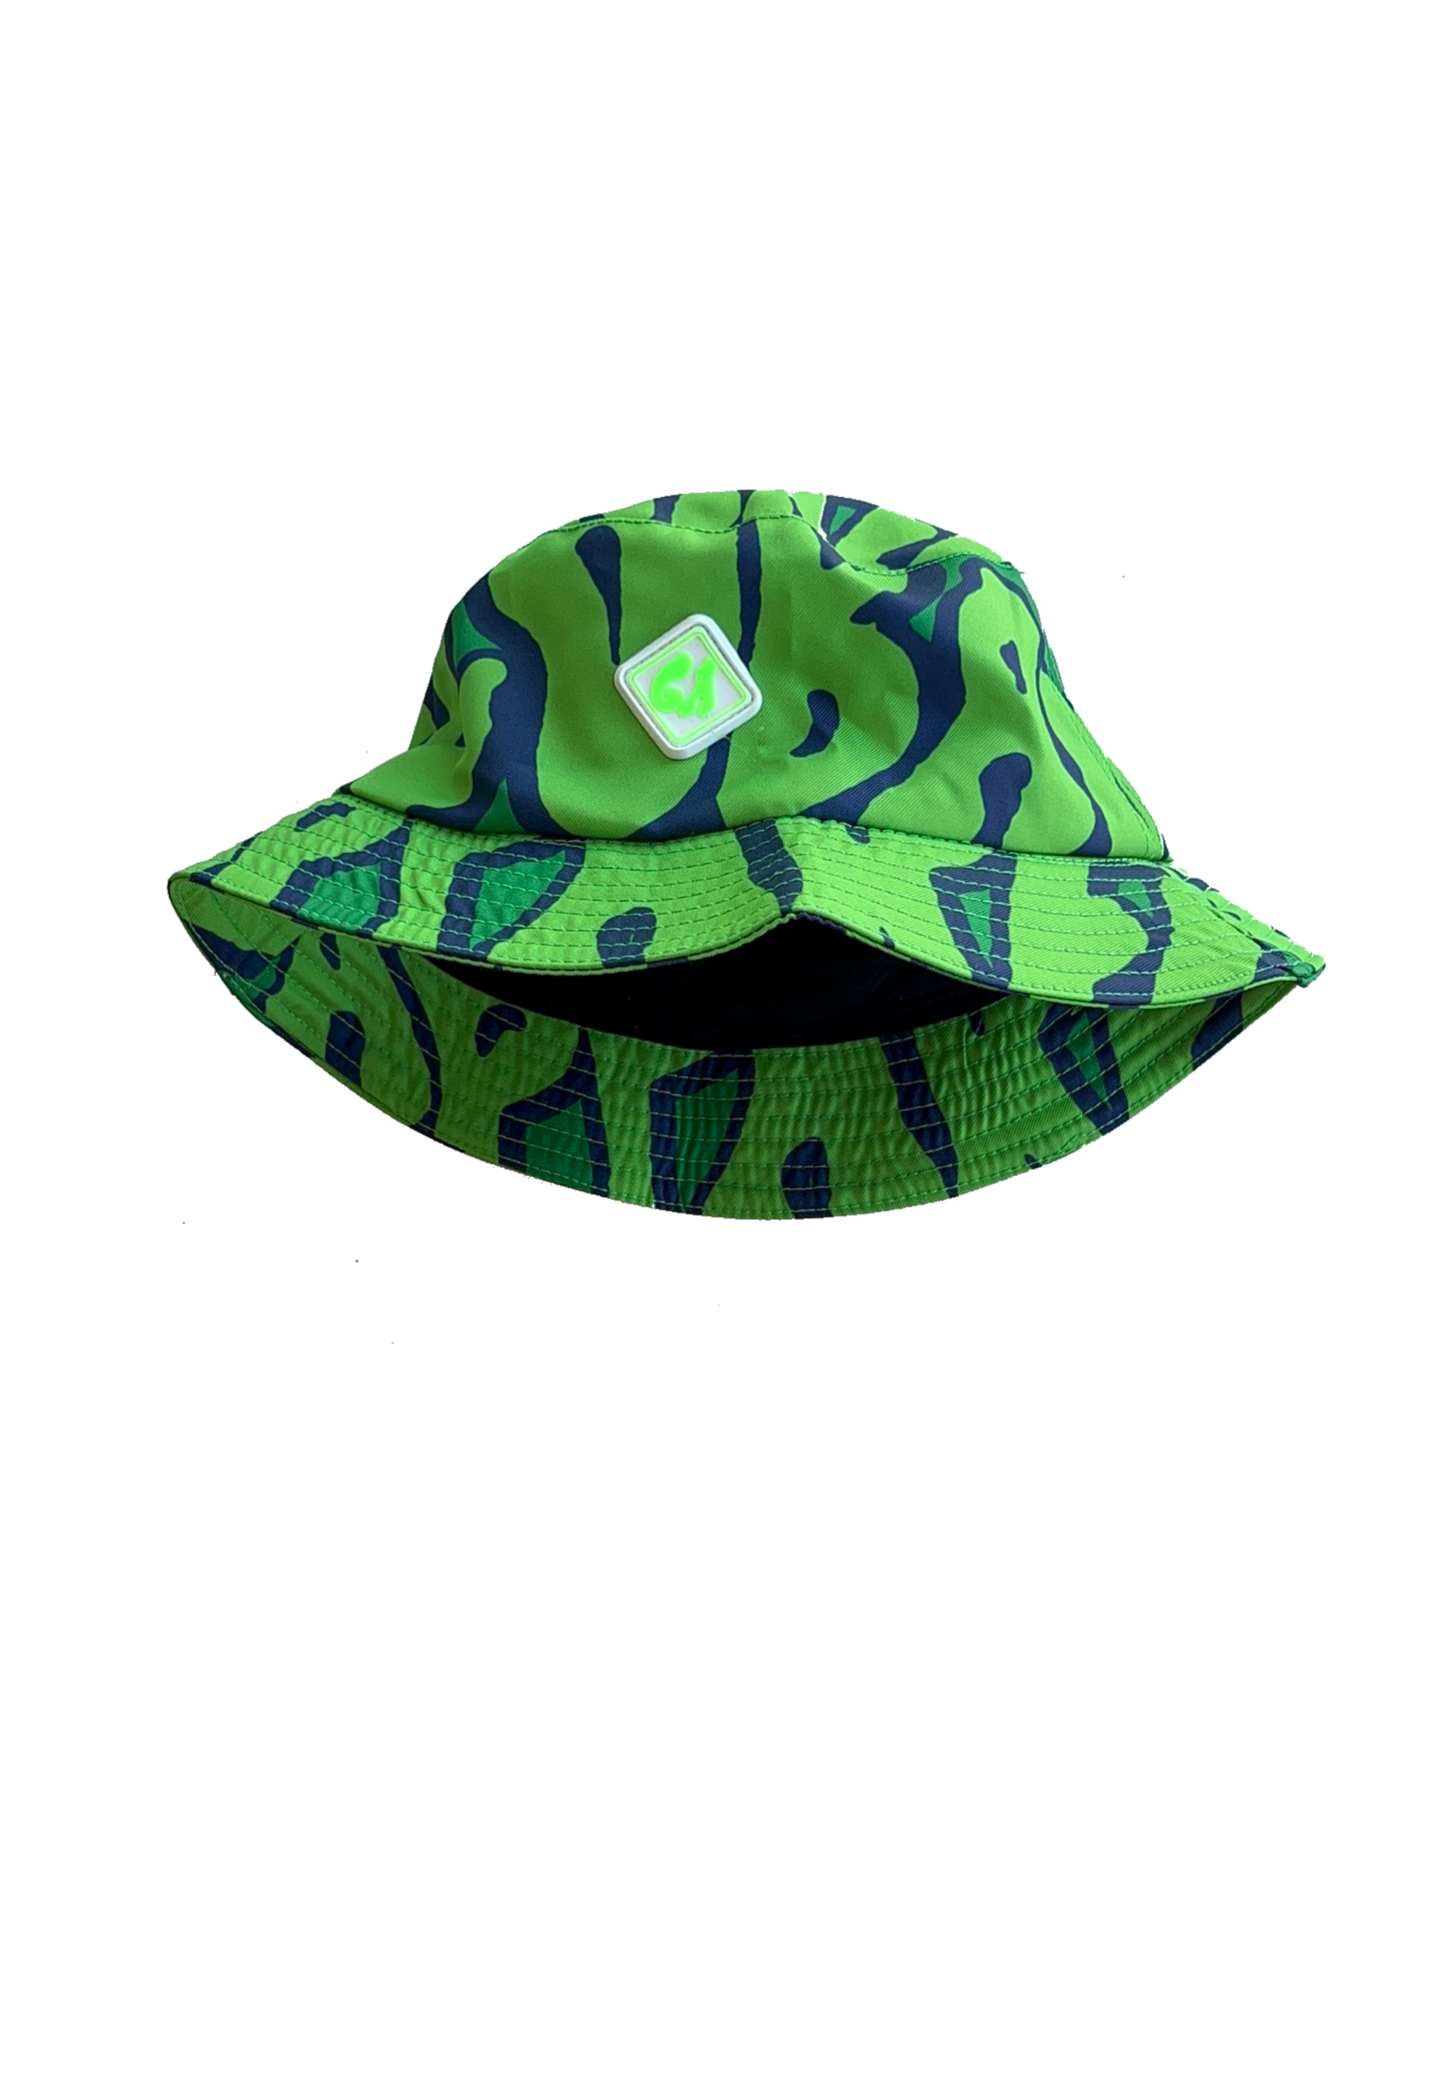 Green bucket hat